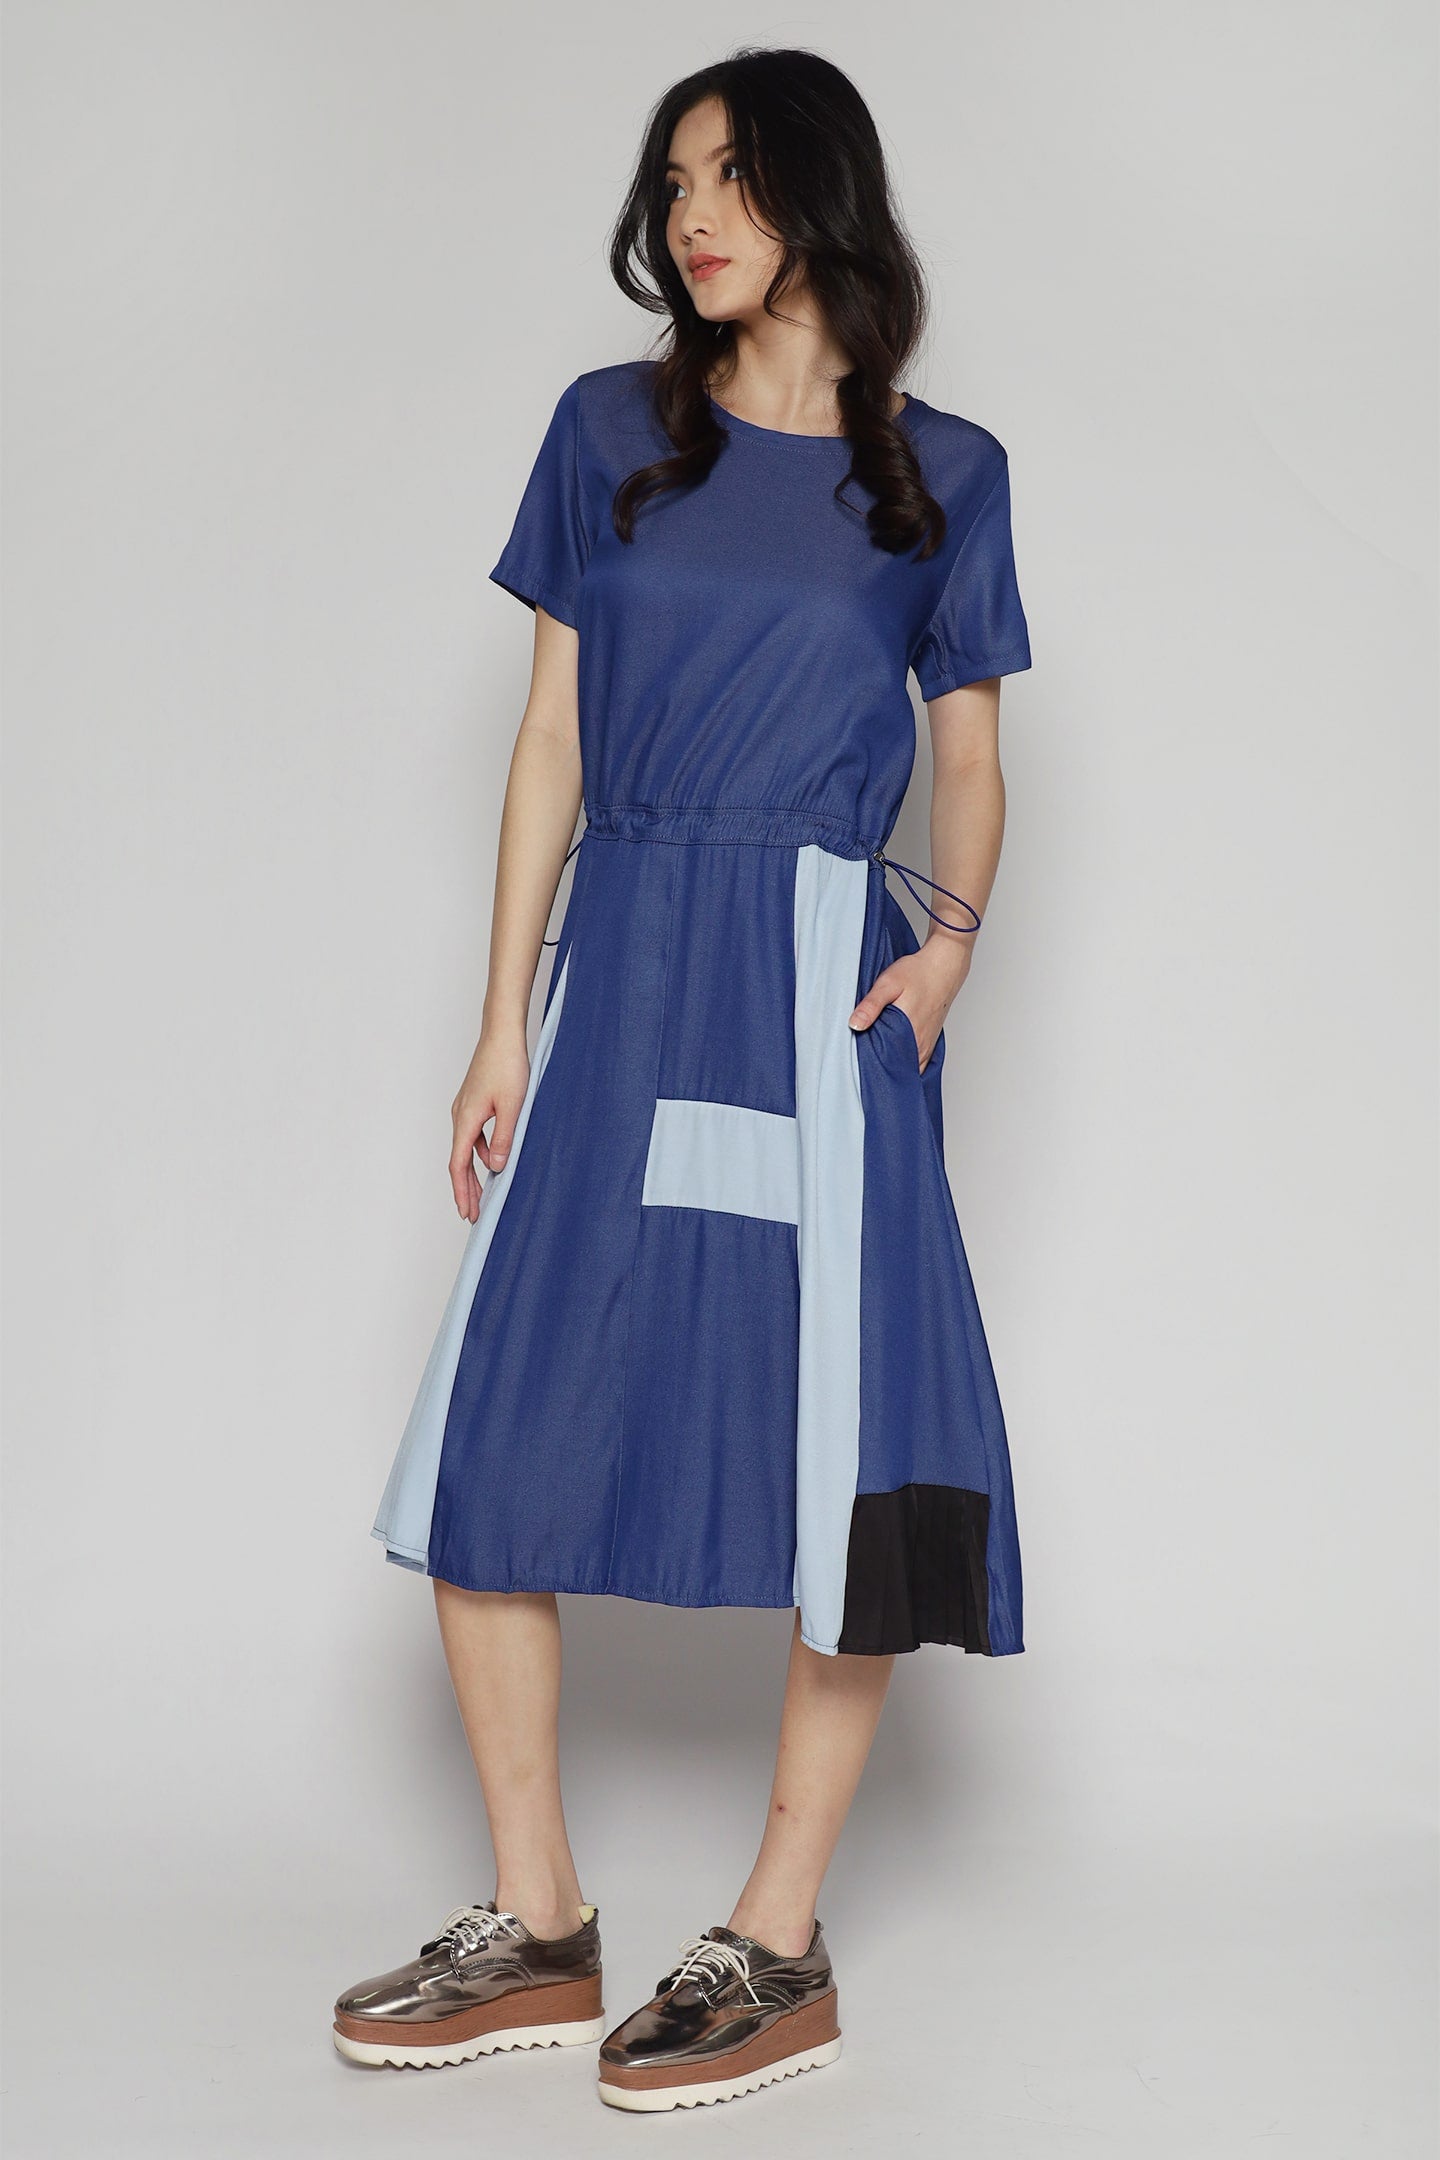 Qian Drawstring Dress in Blue